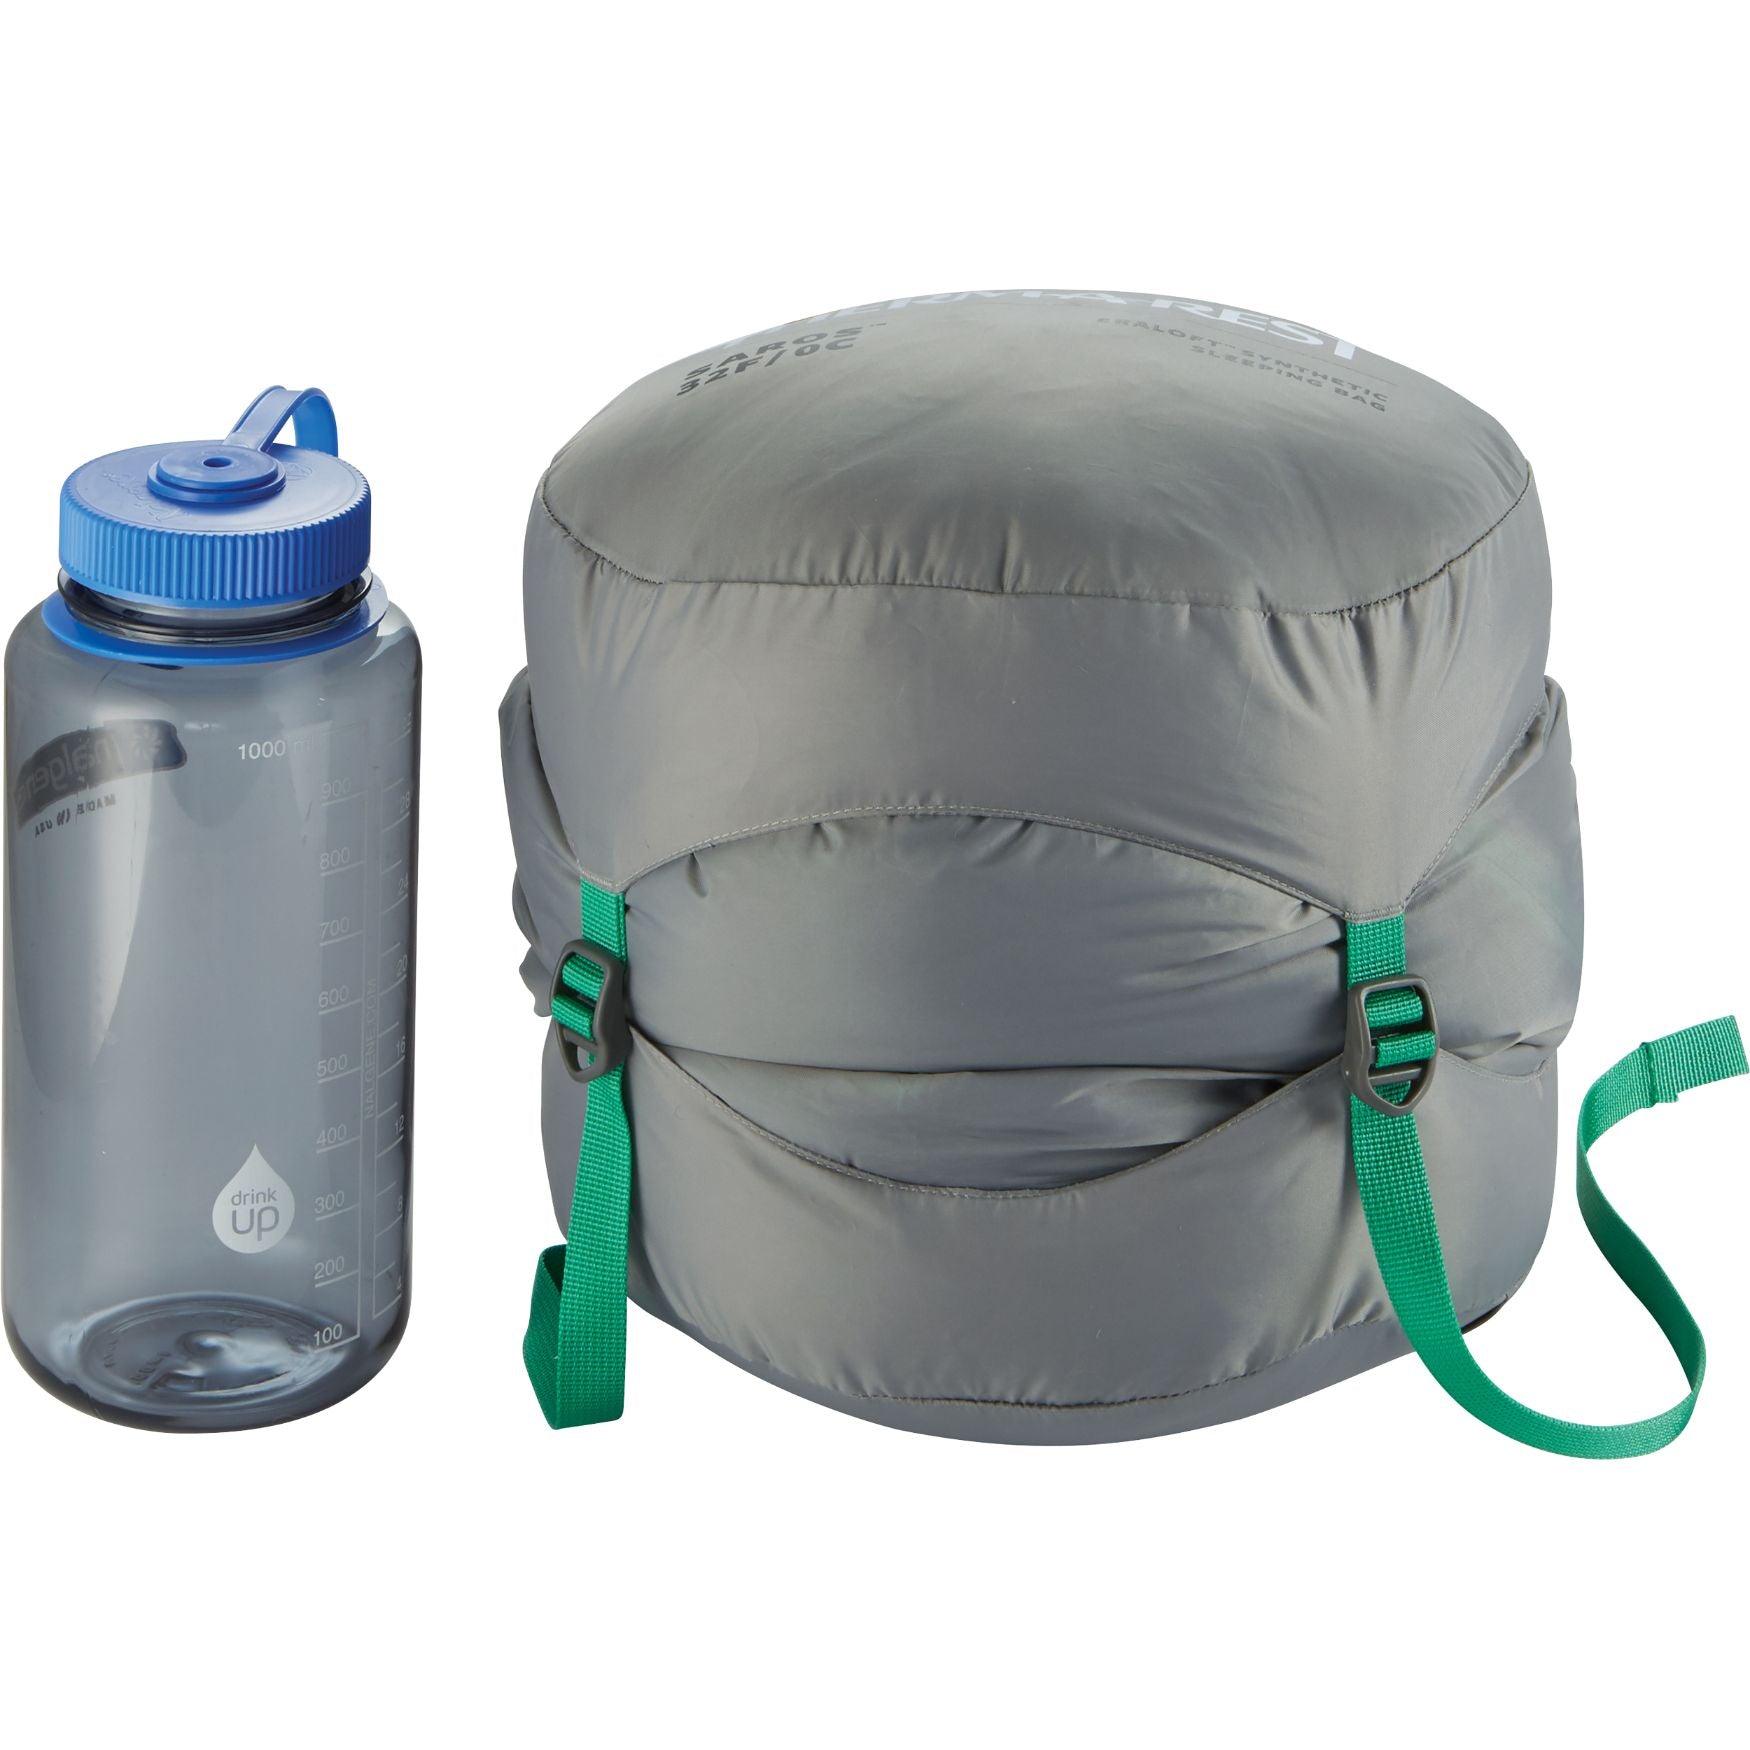 Therm-a-Rest Saros 20F/-6C Sleeping Bag